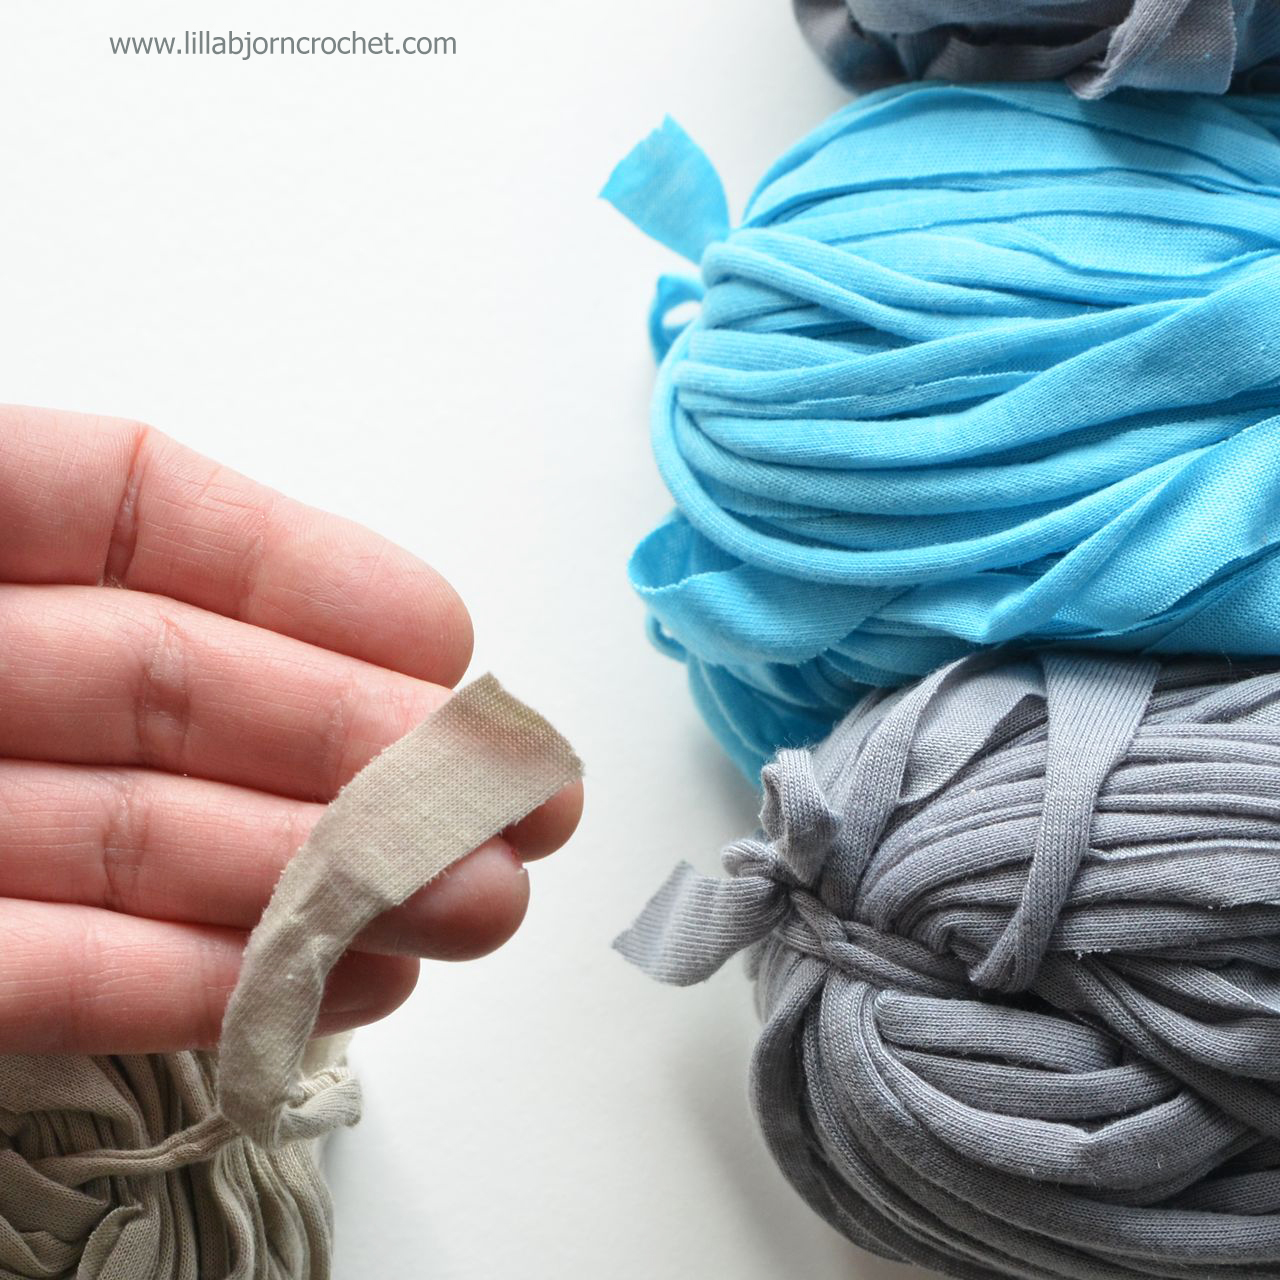 Mini Nooodle yarn by Scheepjes is a mini version of a regular T-shirt yarn. Review by Lilla Bjorn Crochet